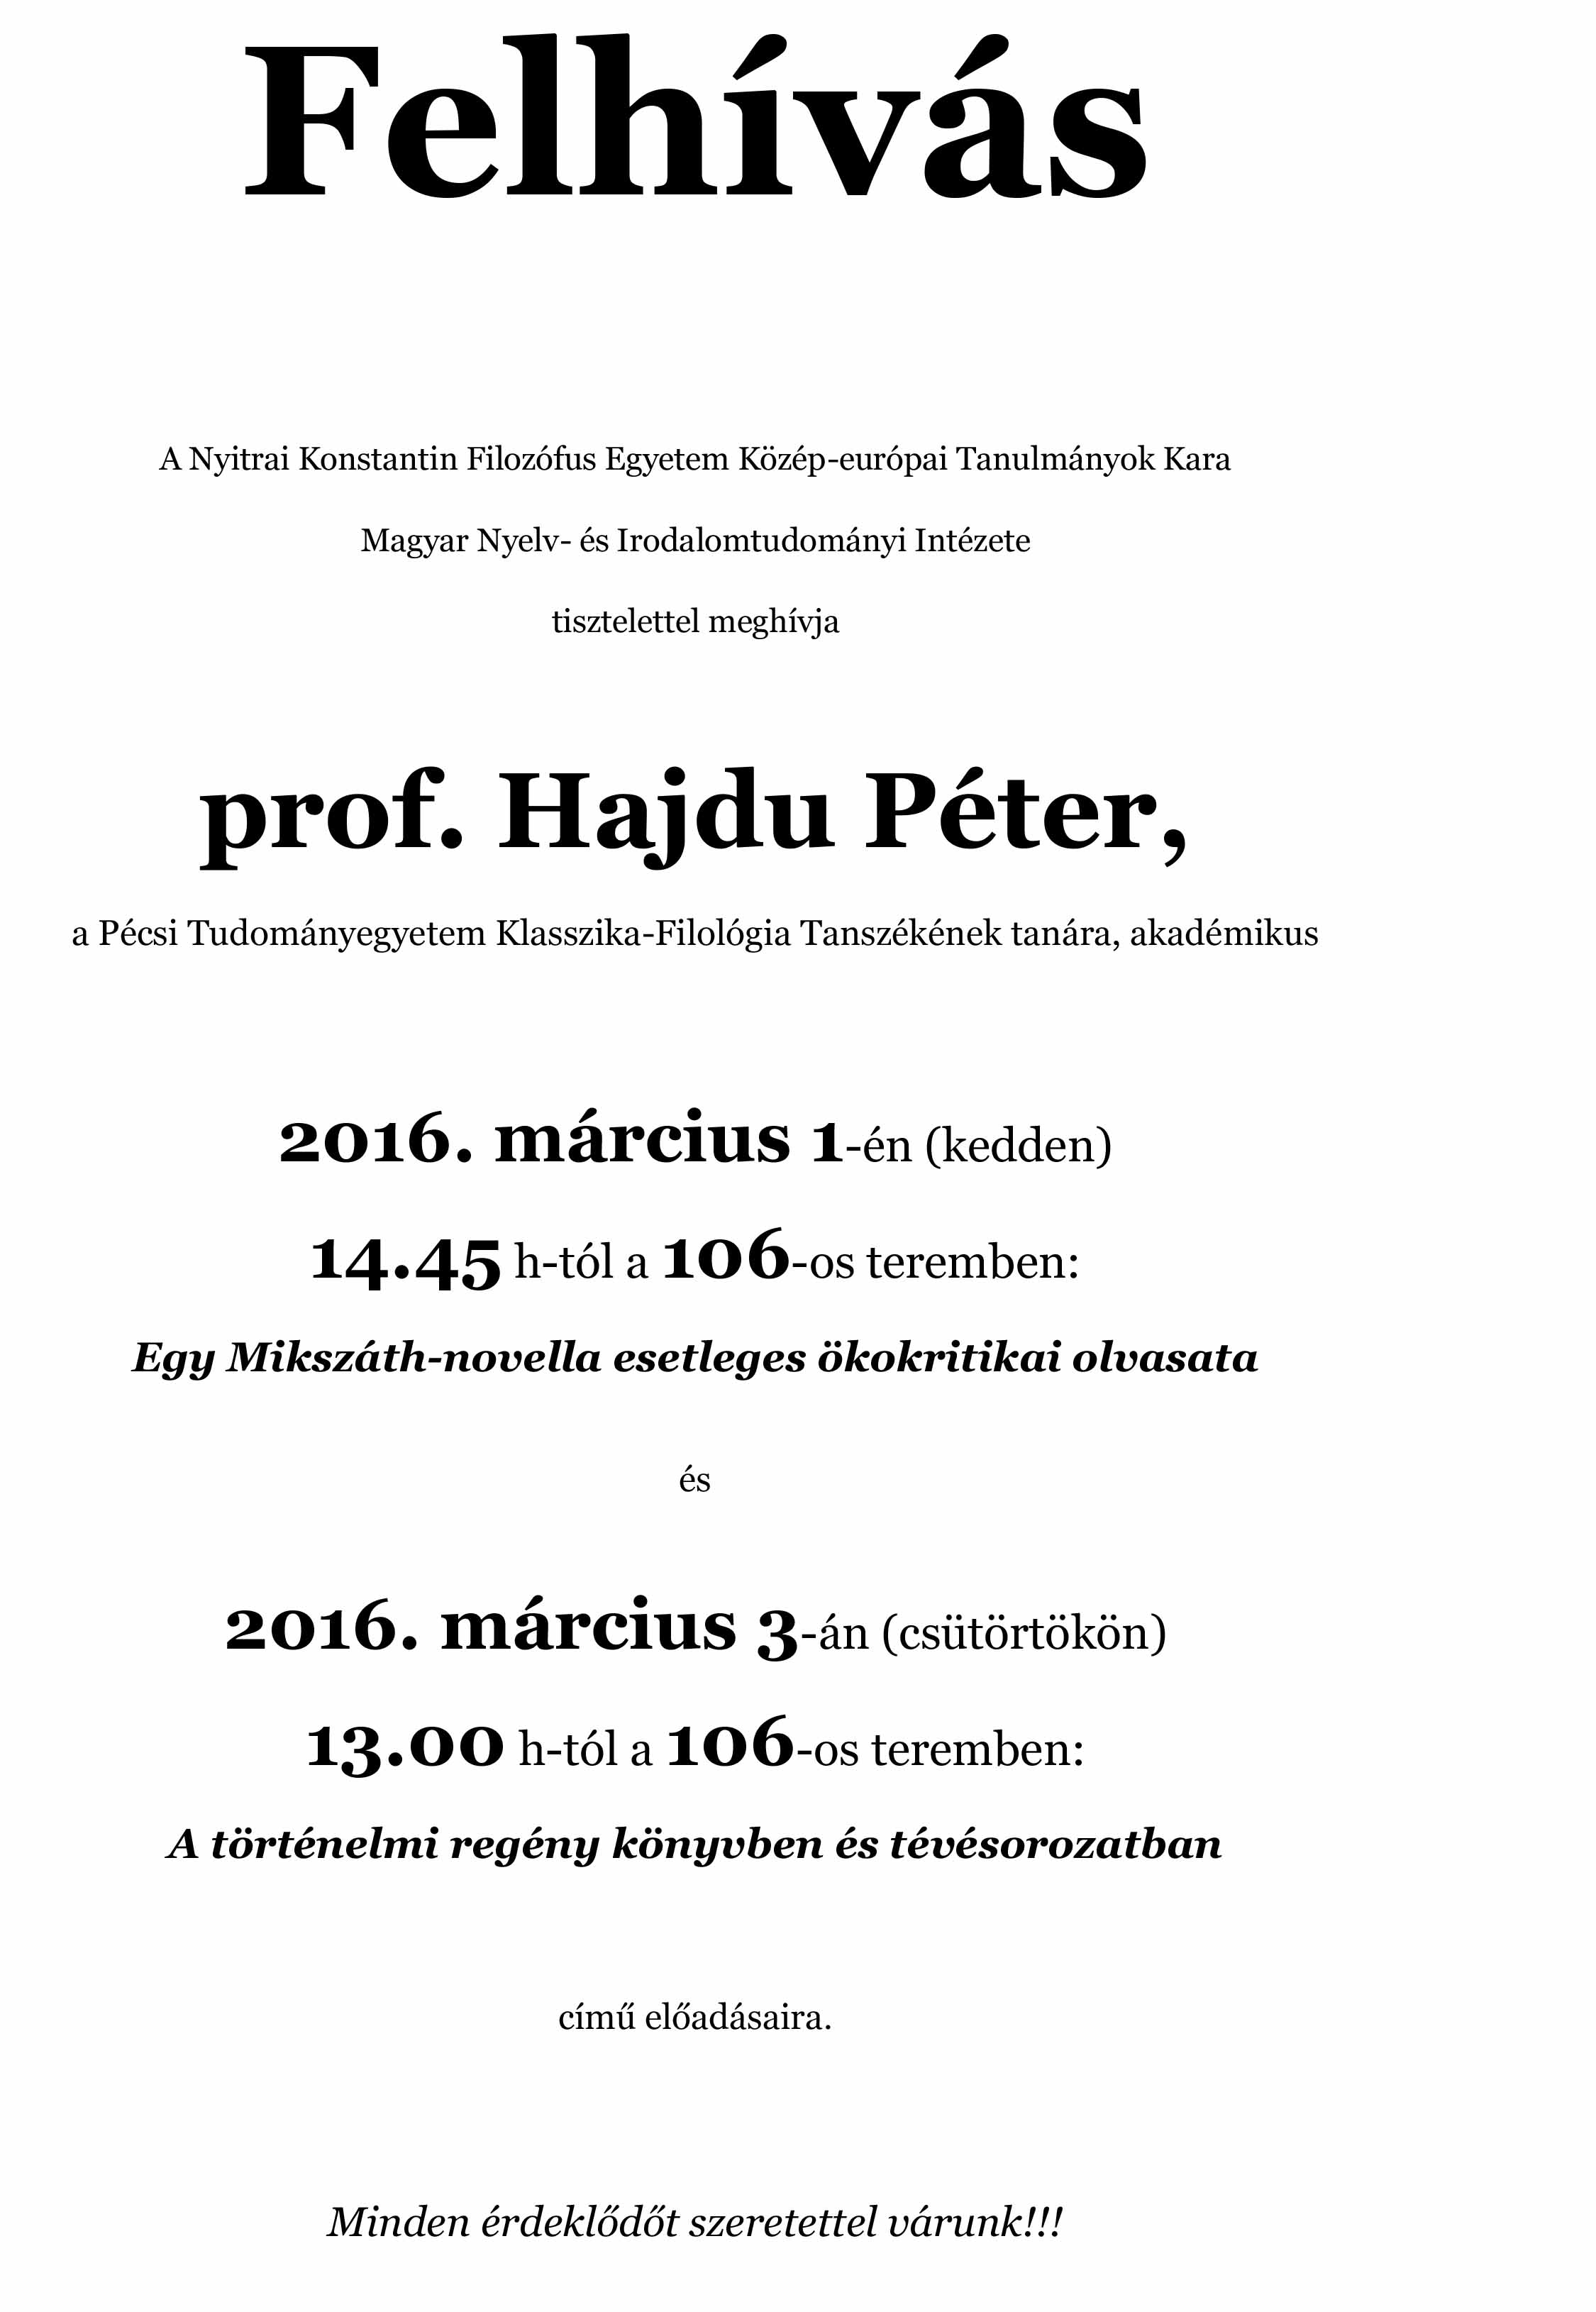 Eloadas Hajdu Peter 2016